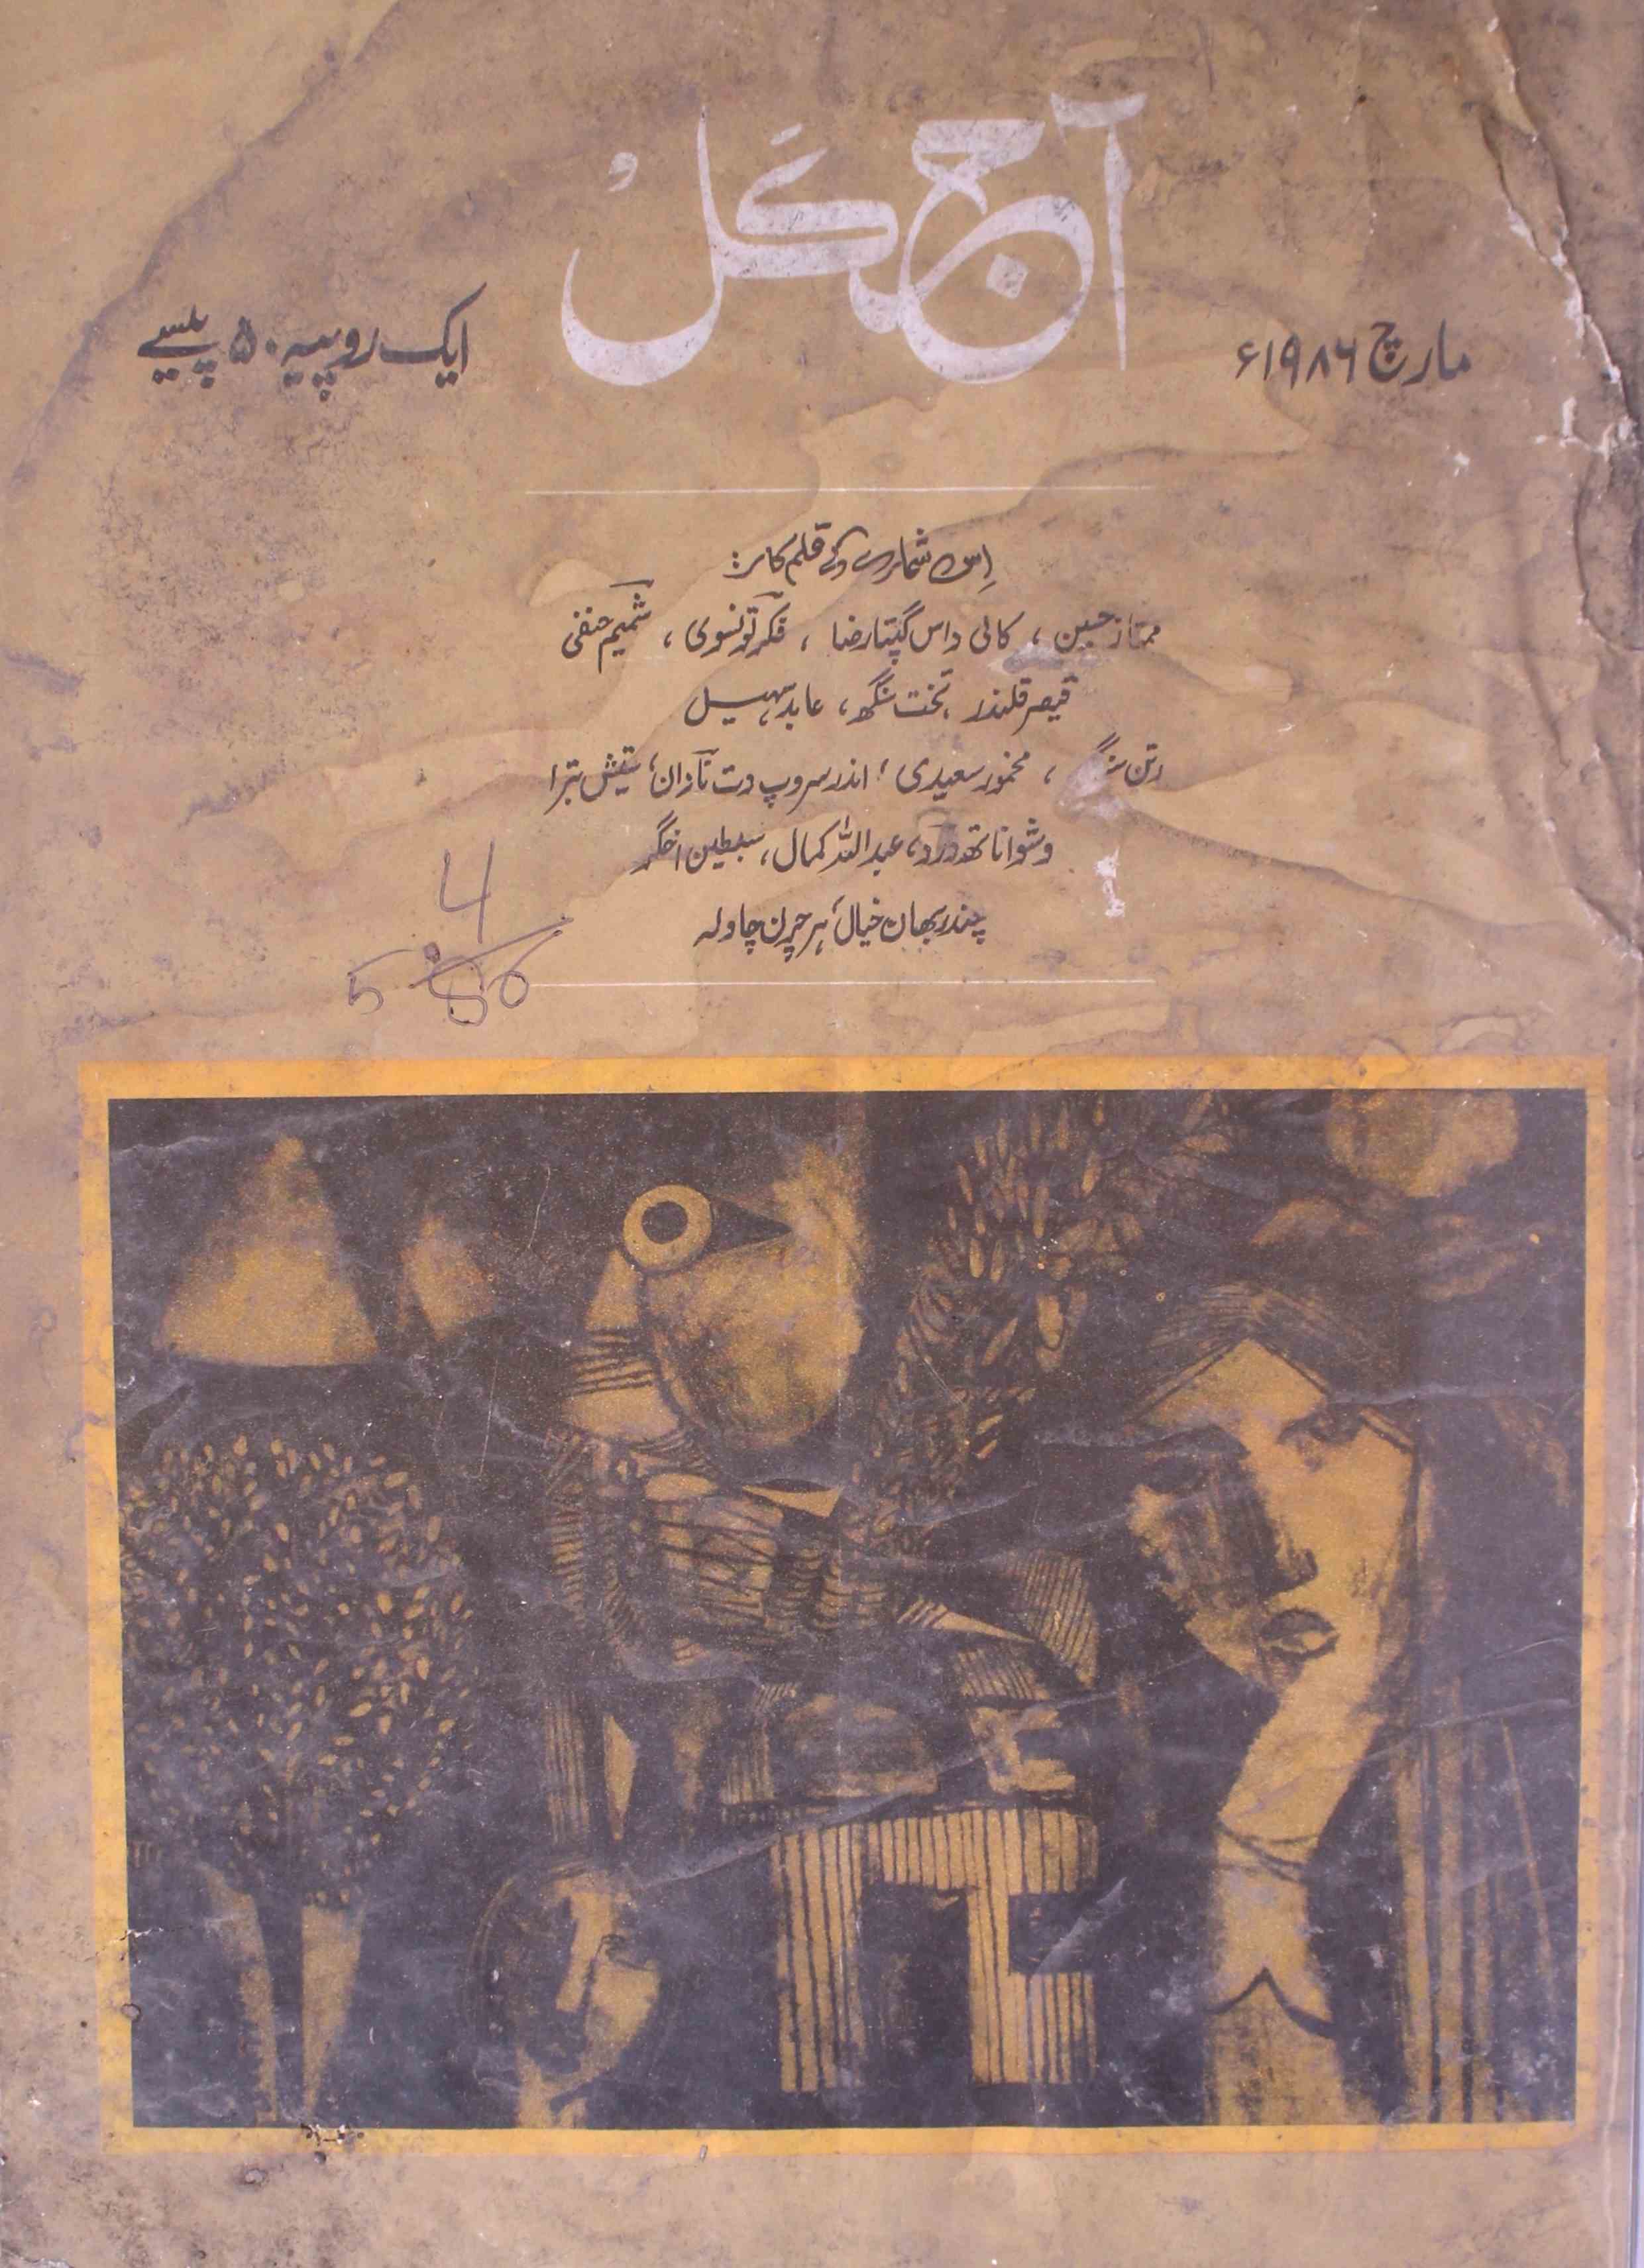 Aj Kal Jild 4 Shumara 8 March 1986-Shumara Number-008